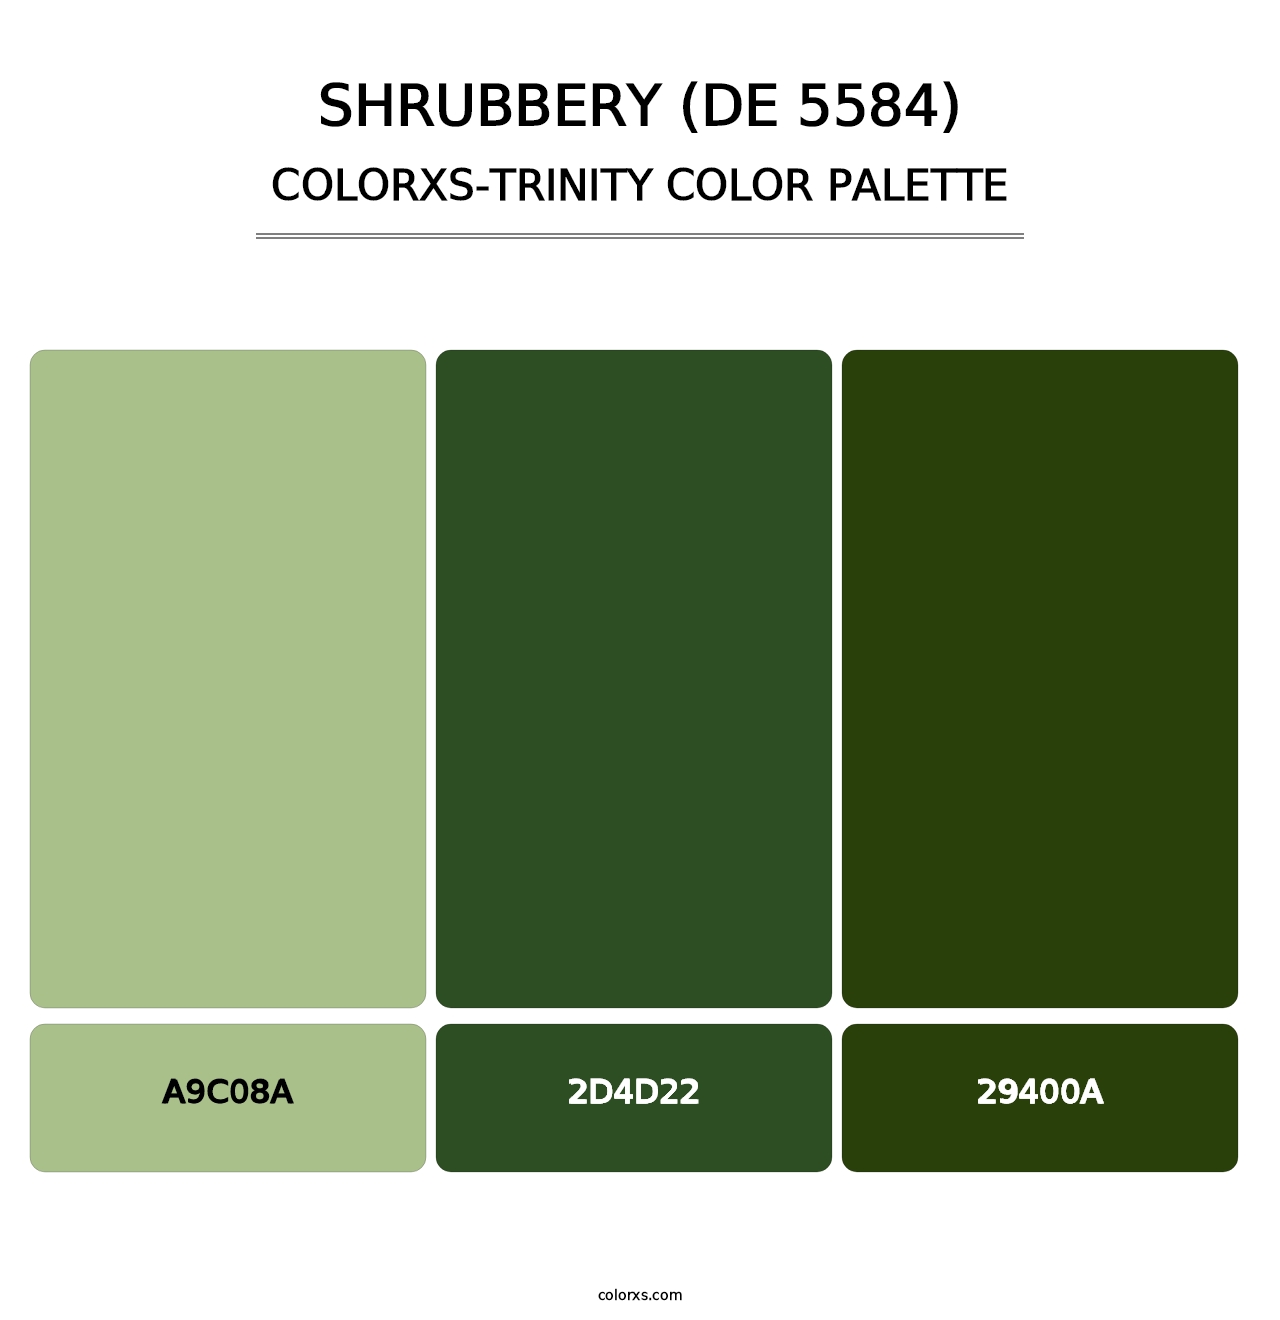 Shrubbery (DE 5584) - Colorxs Trinity Palette